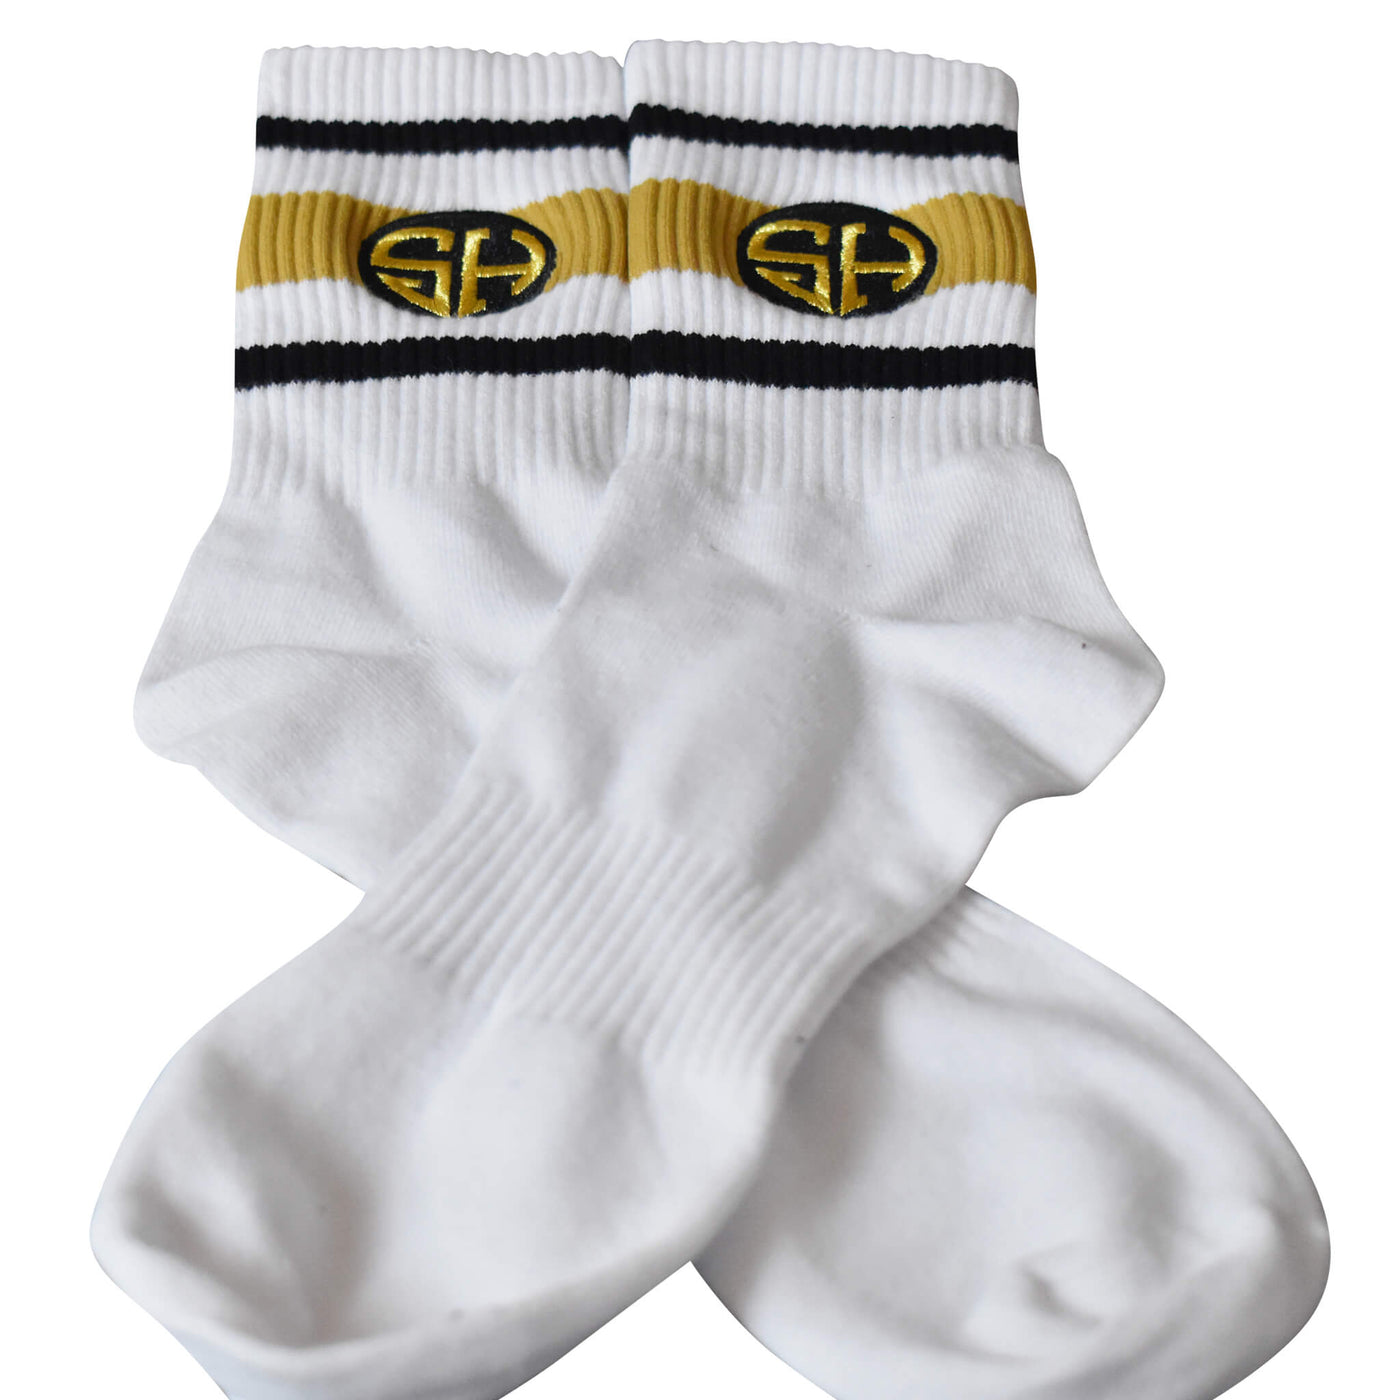 Signature Sock - White / Black / Gold